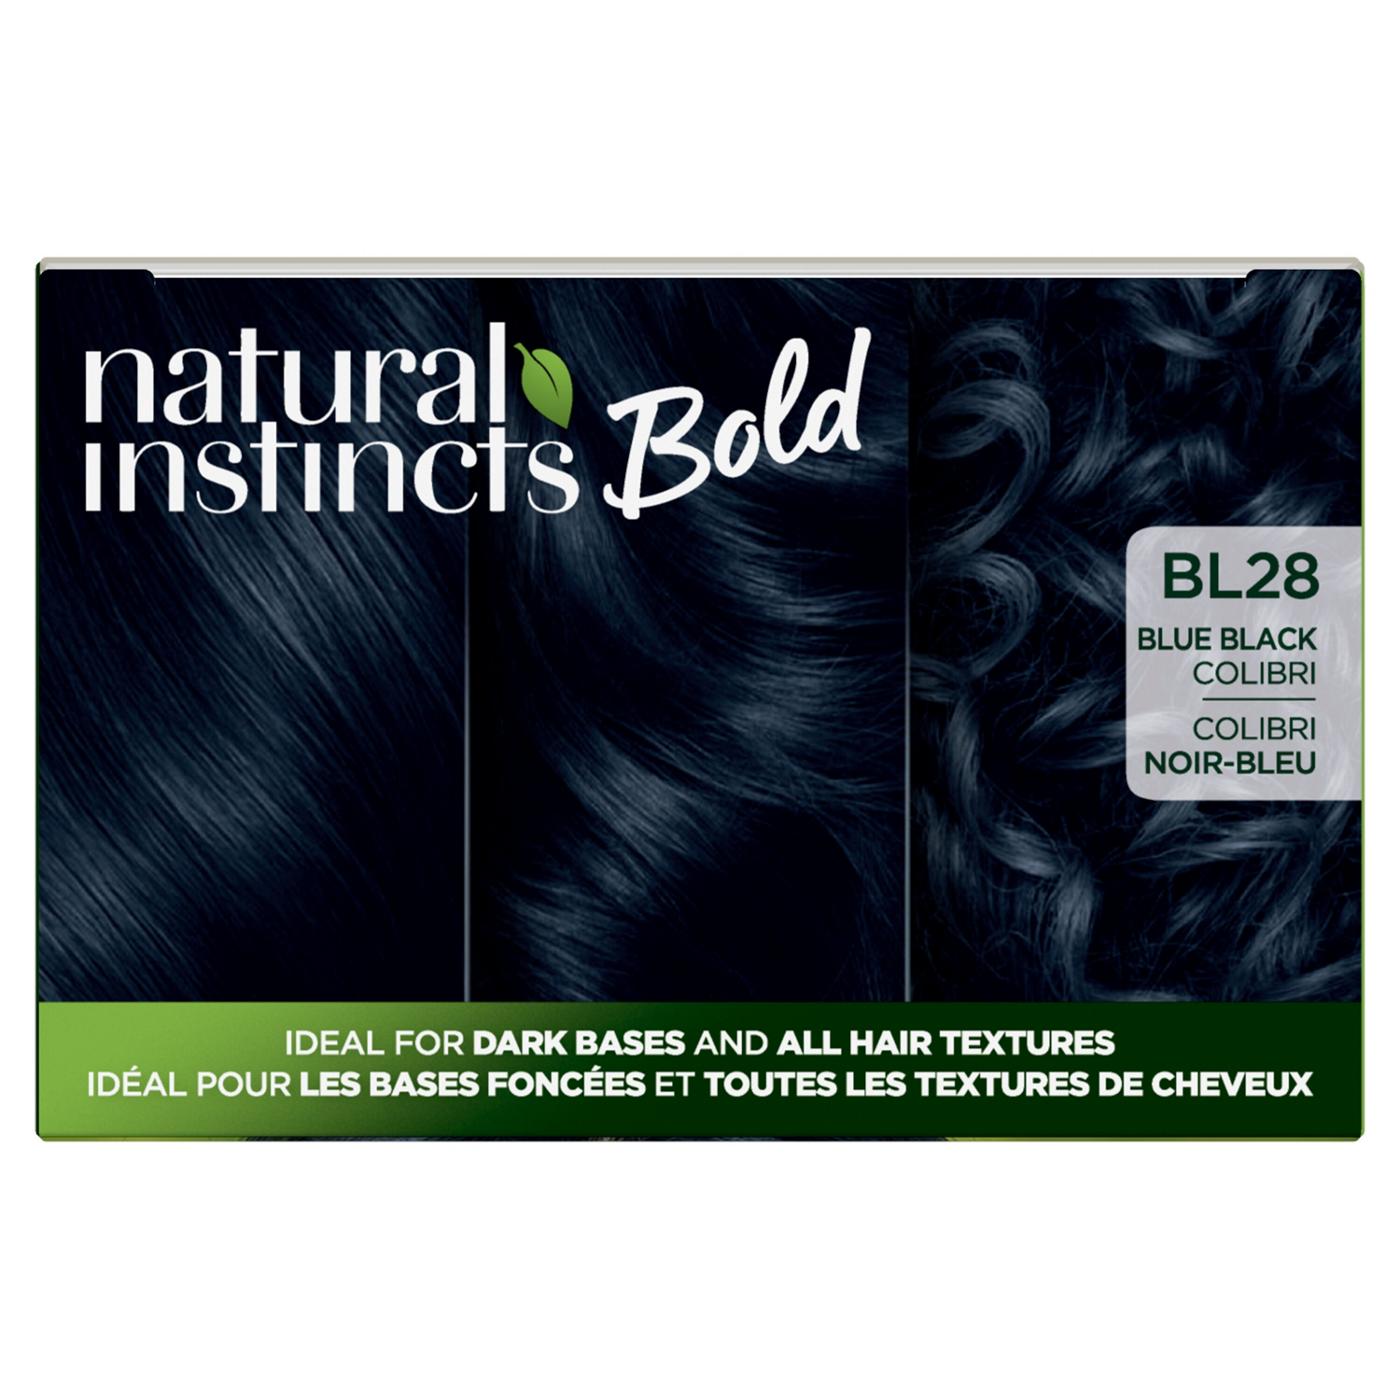 Clairol Natural Instincts Bold Permanent Hair Color - BL28 Blue Black Colibri ; image 2 of 6